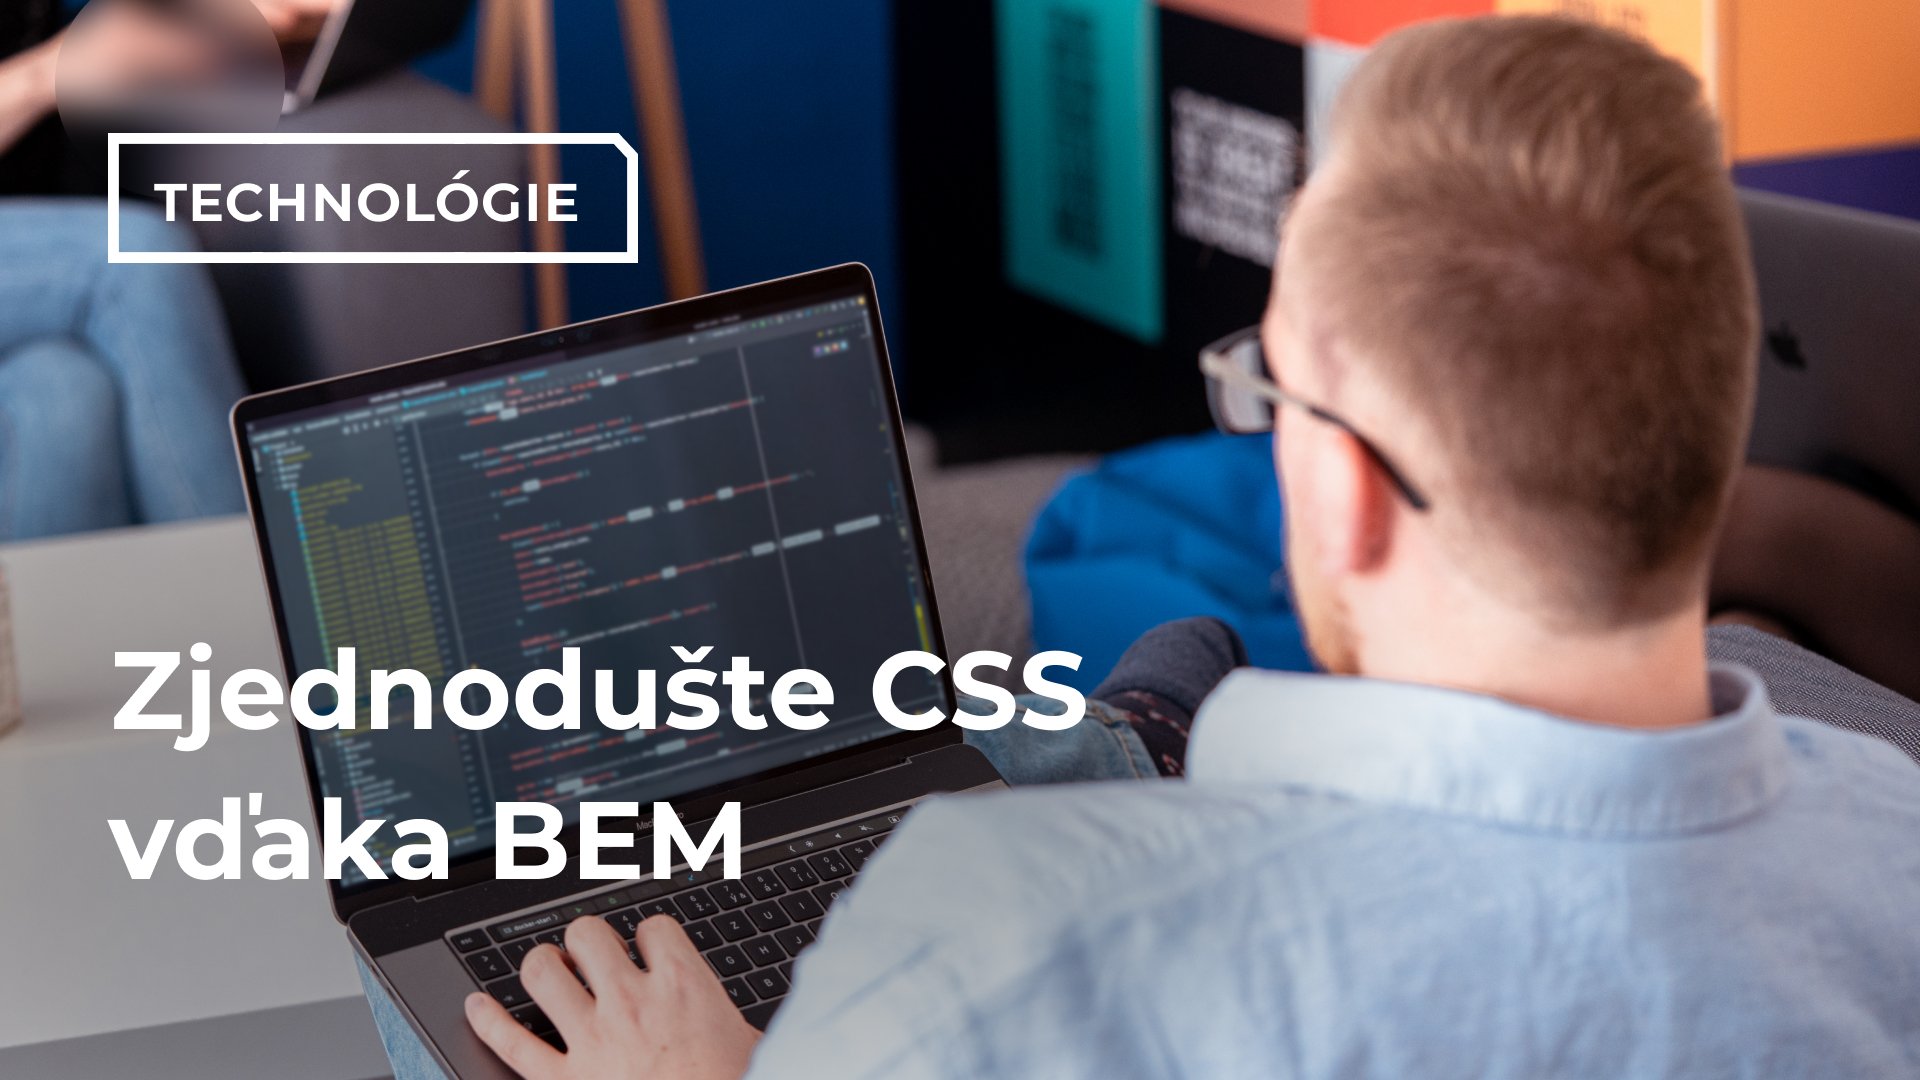 Zjednodušte CSS vďaka BEM